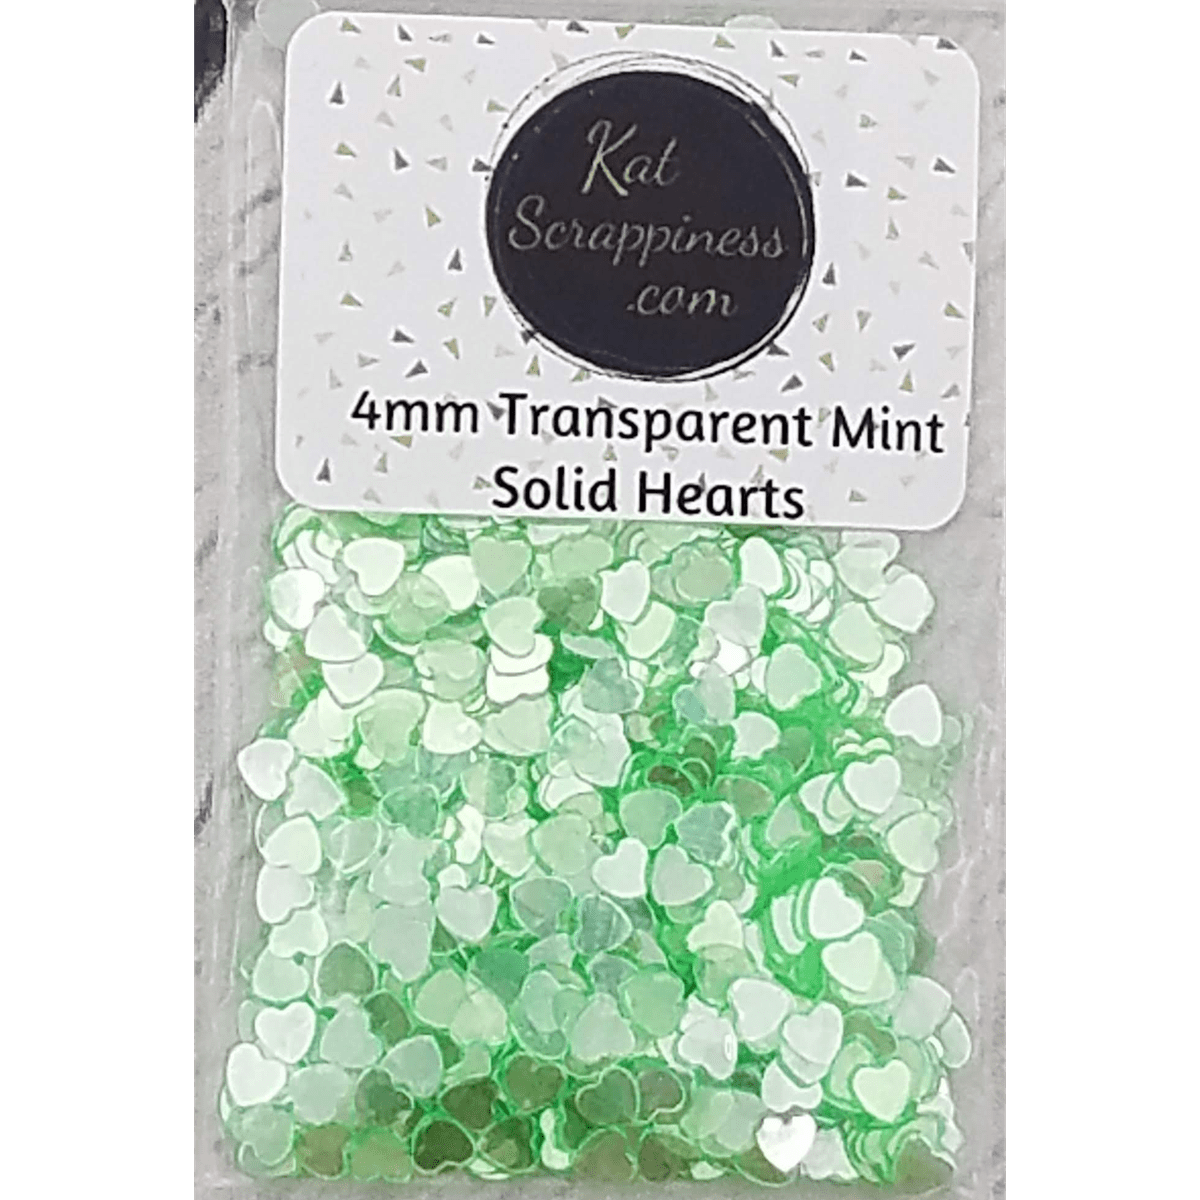 4mm Transparent Mint Solid Heart Confetti - Sequins - Kat Scrappiness